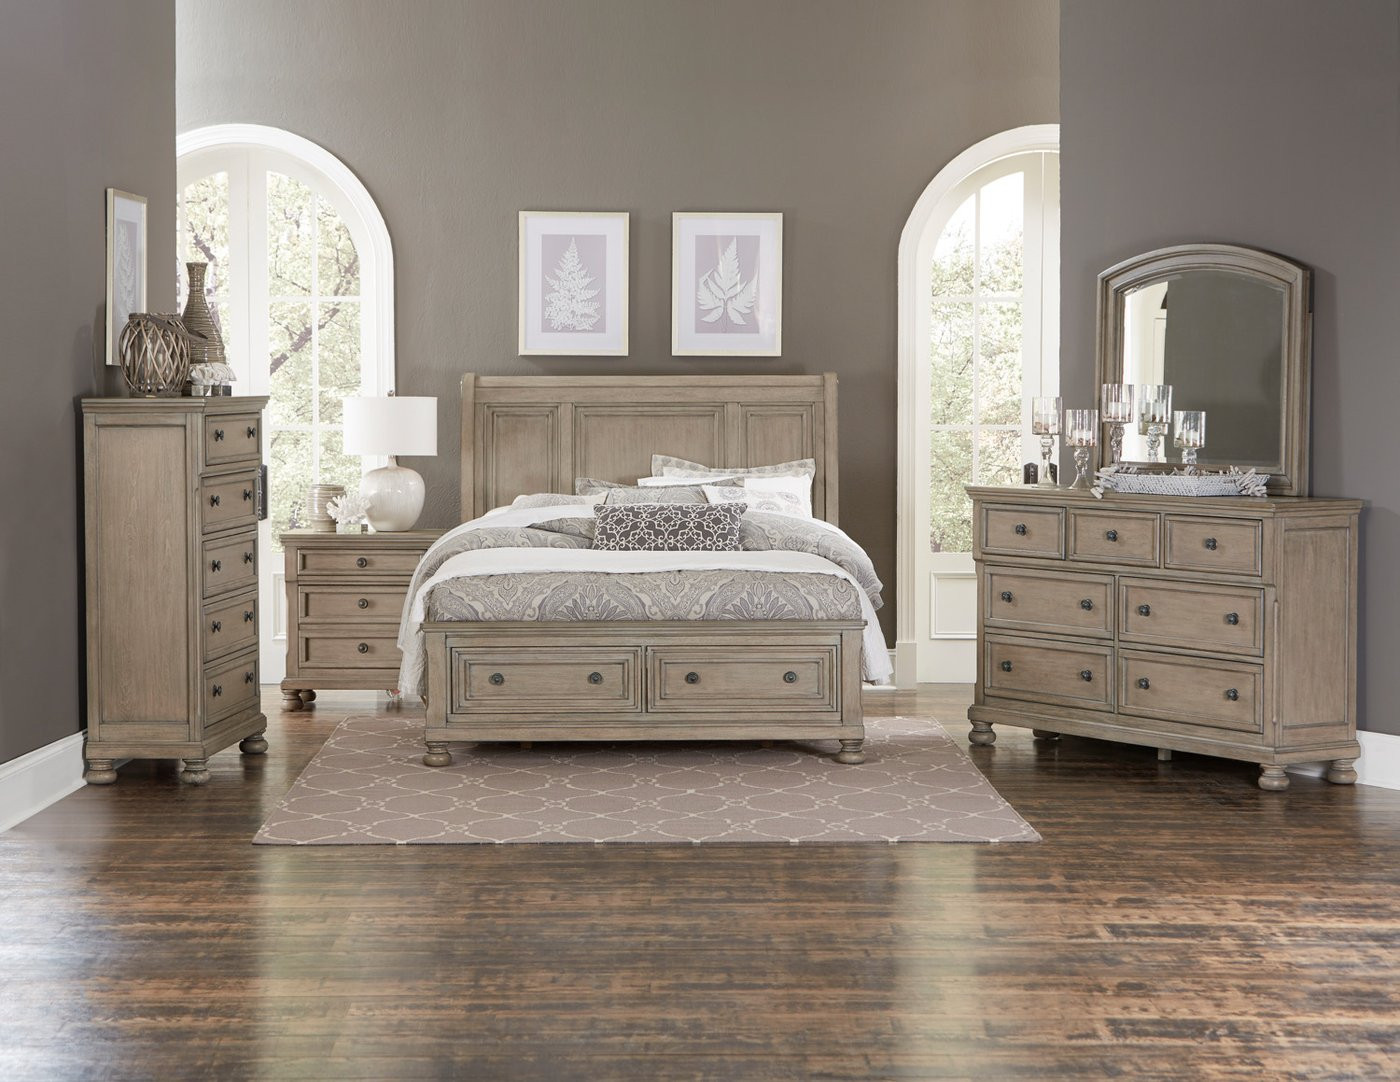 King Bedroom Sets With Storage
 Windchester 5 Piece King Storage Bedroom Set Grey